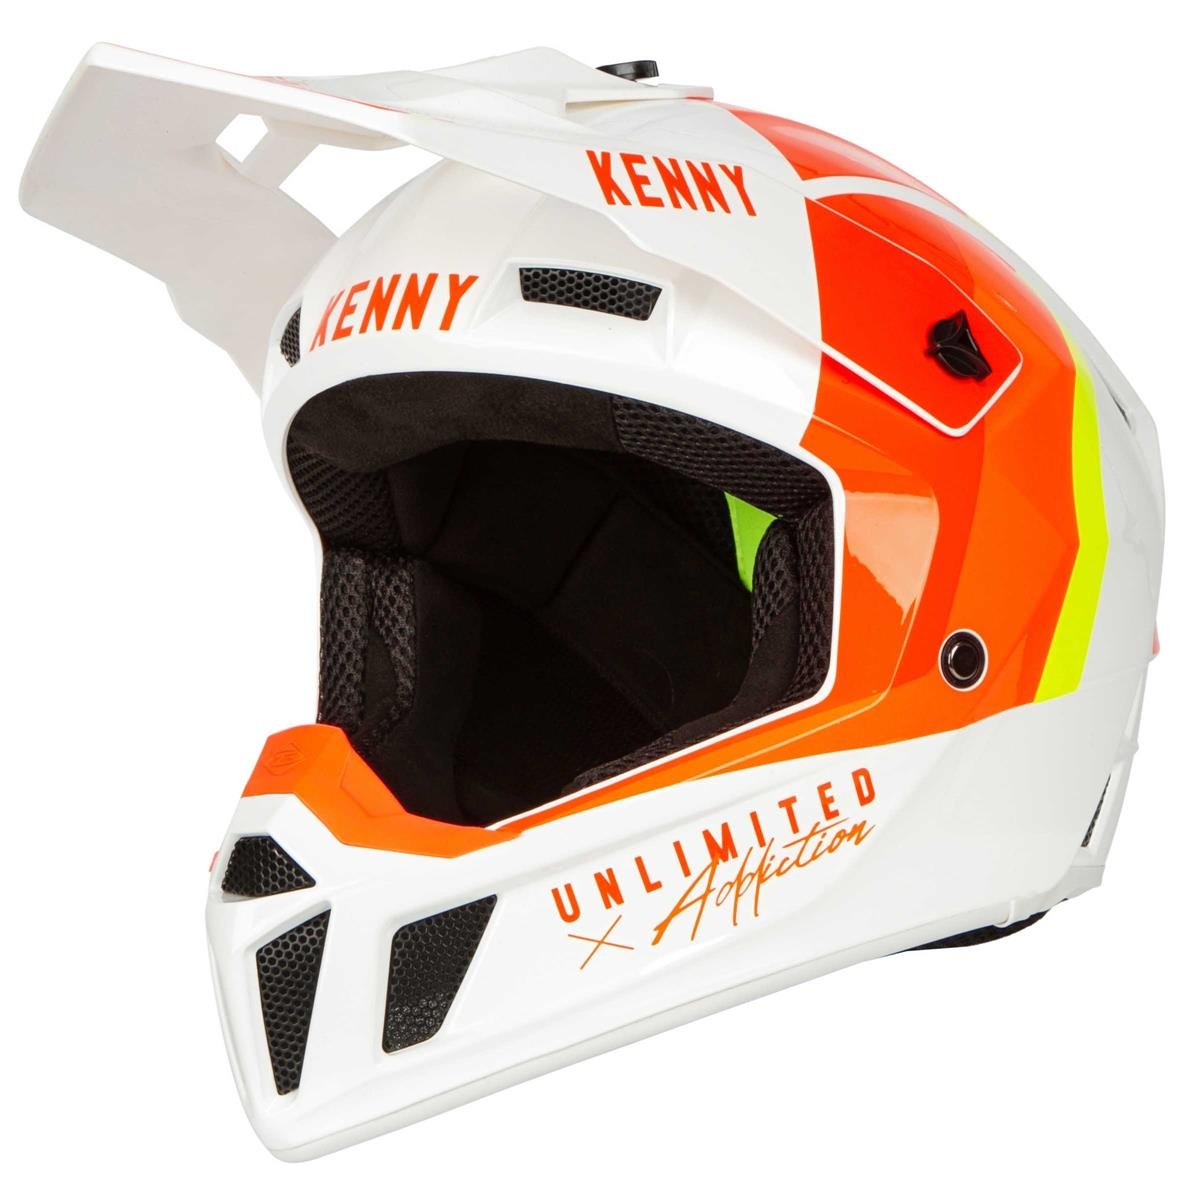 Kenny Motocross-Helm Performance Graphic Weiß/Rot/Orange